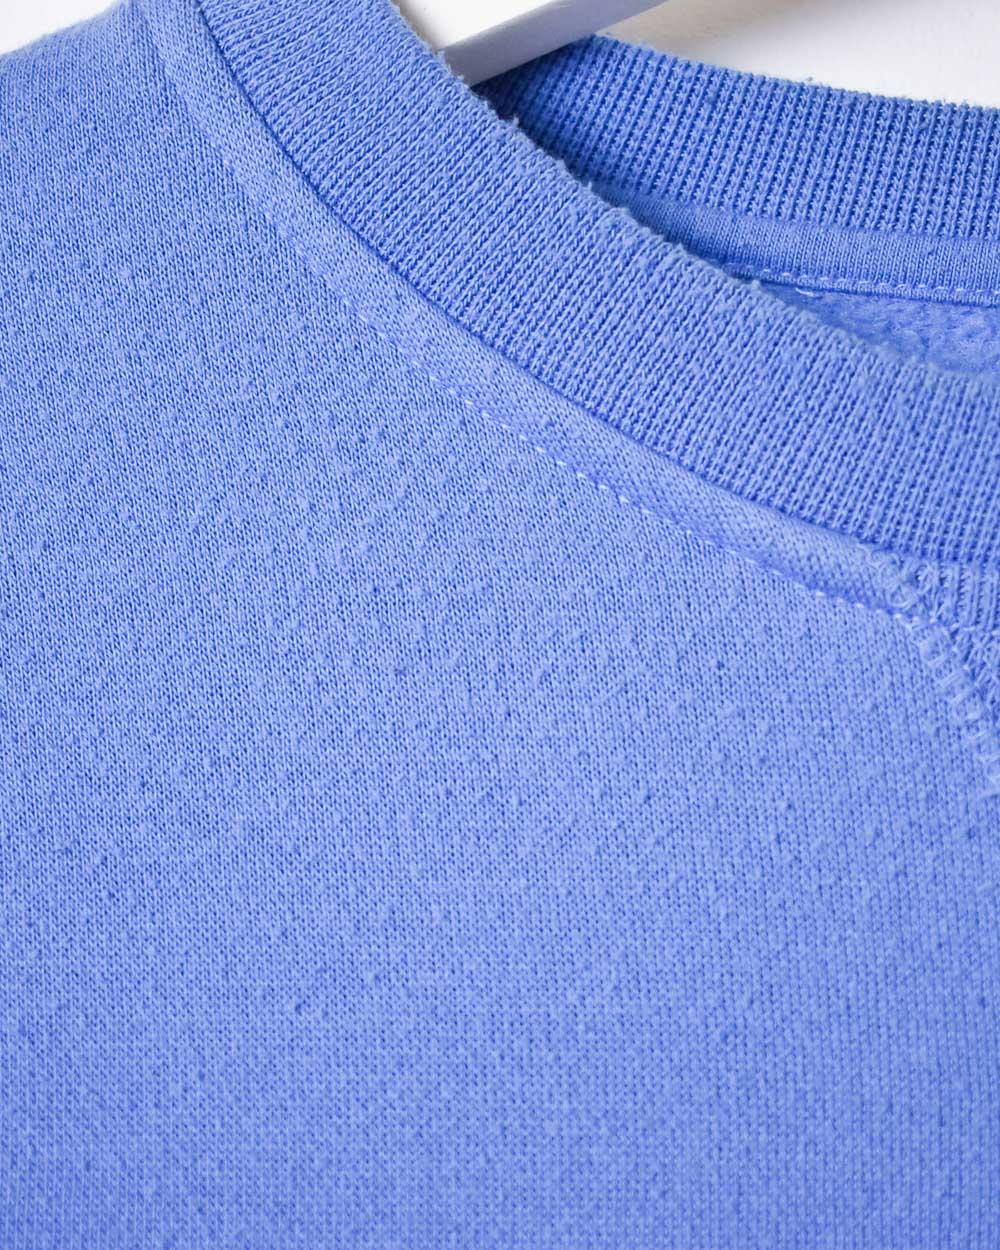 BabyBlue Reebok Sweatshirt - XX-Large